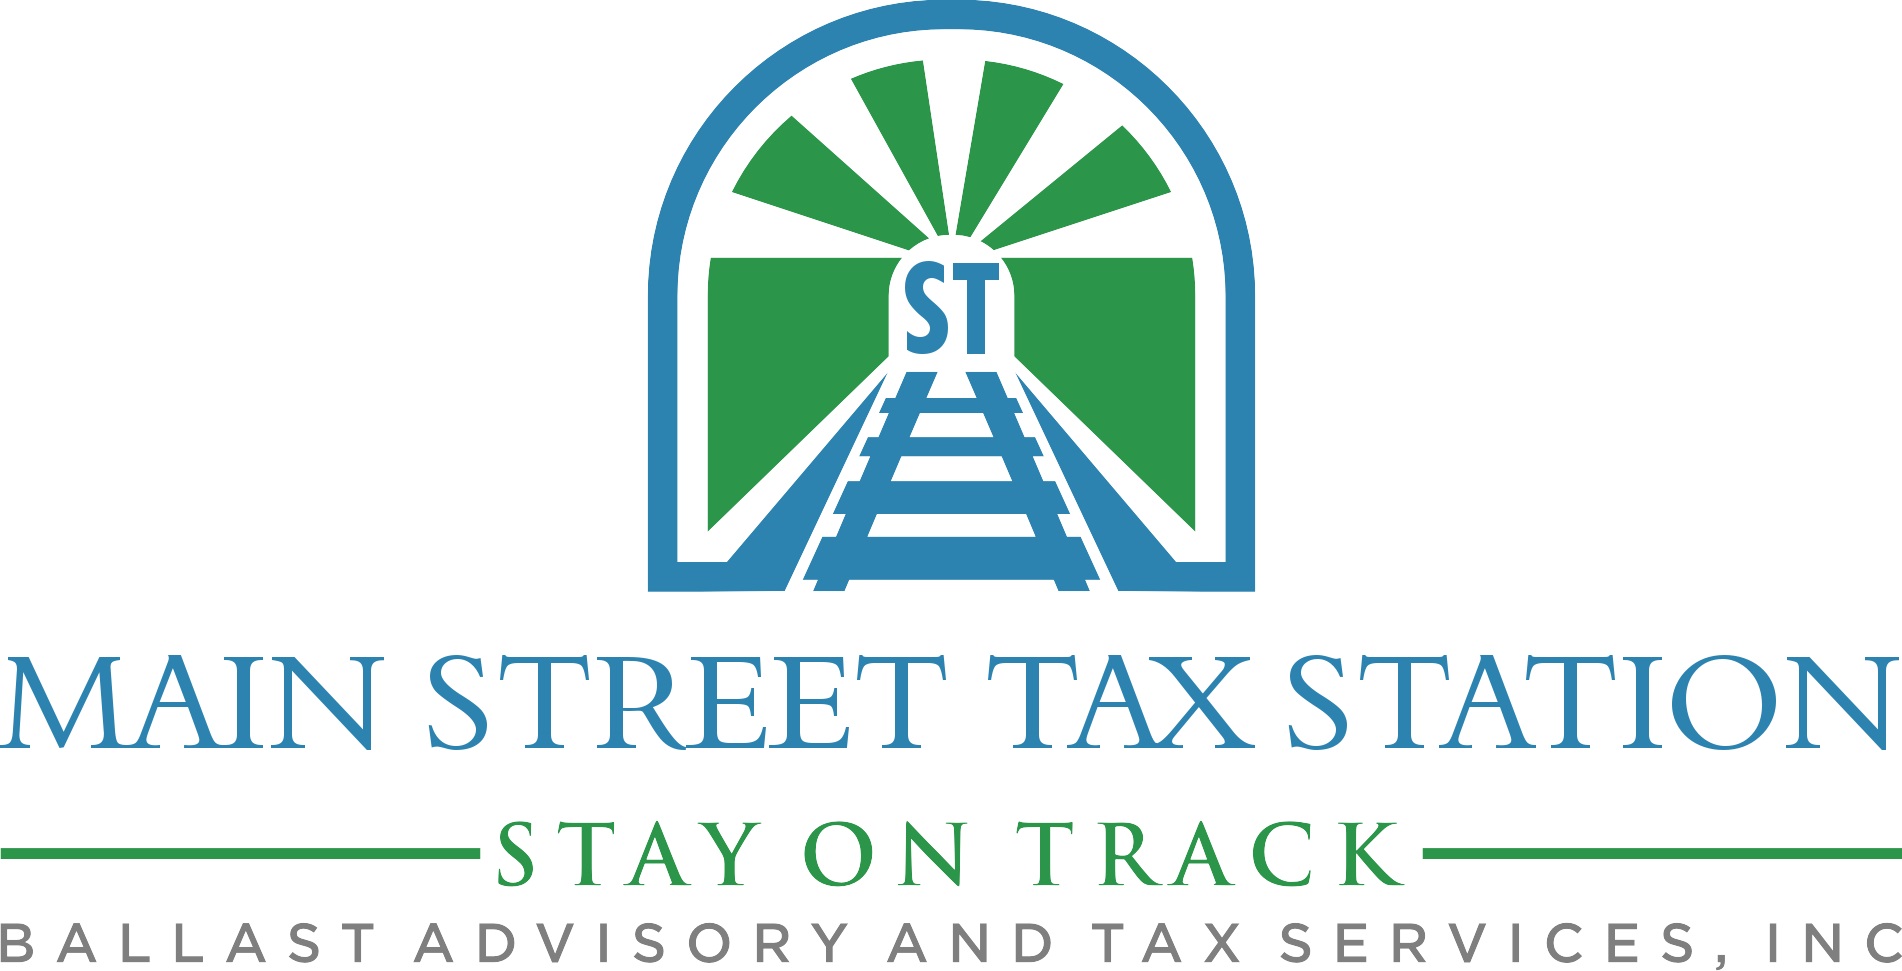 Main Street Tax Station logo